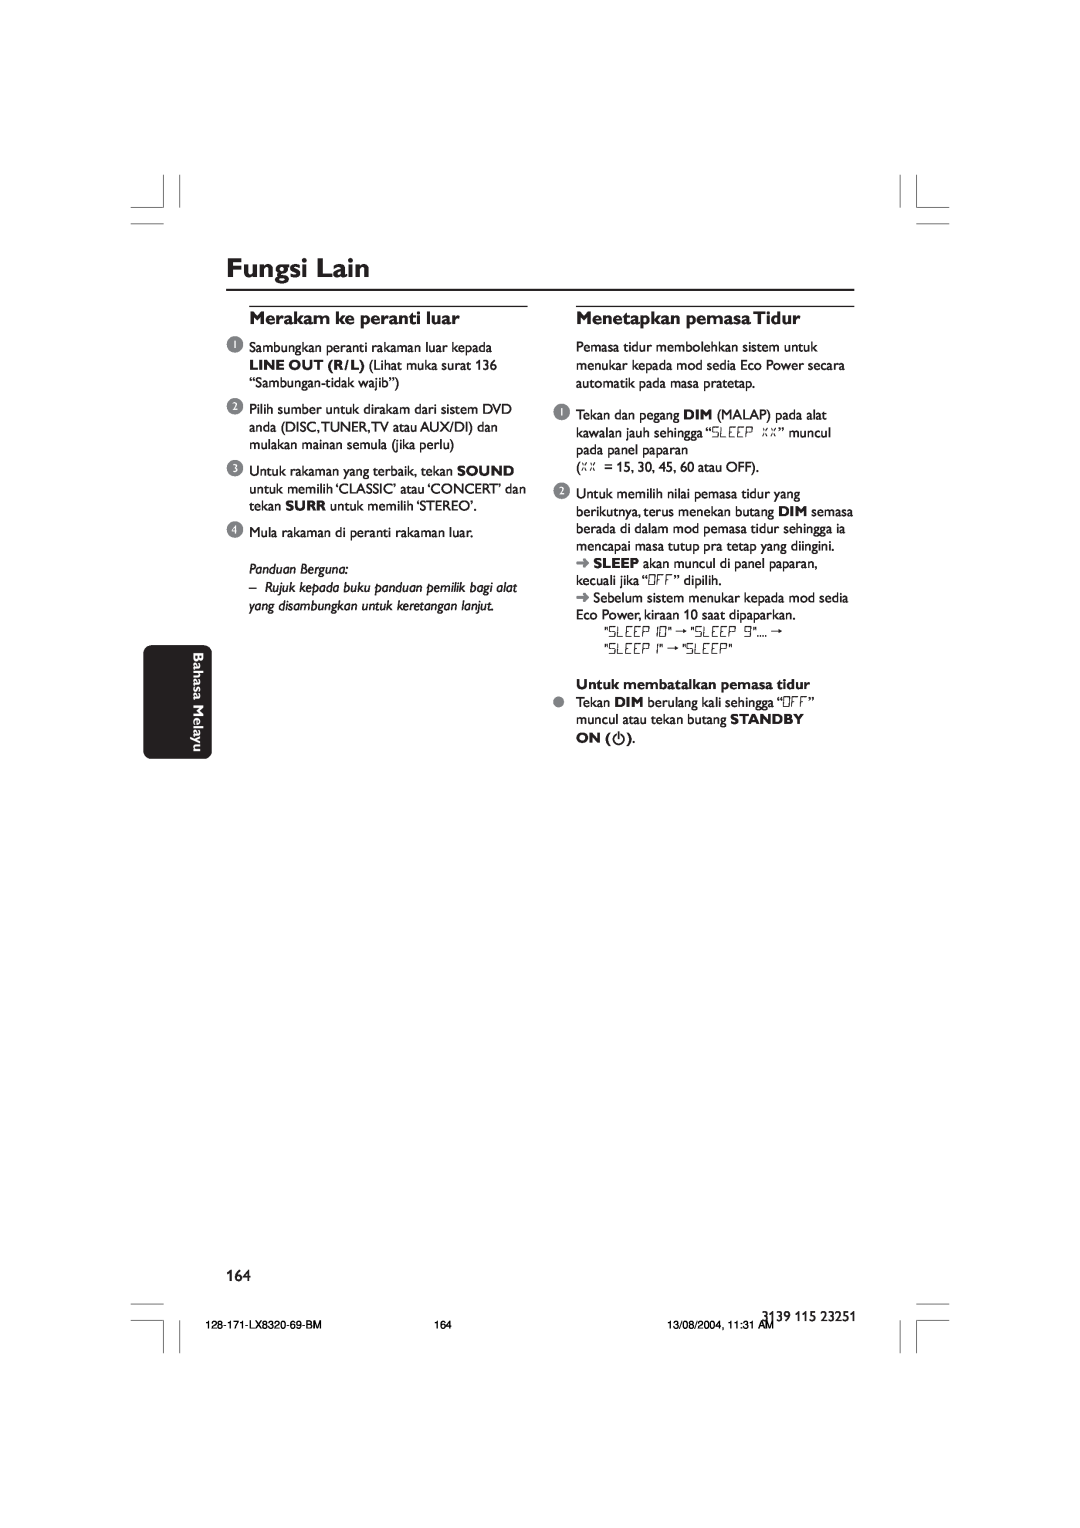 Philips LX8320SA user manual Fungsi Lain, Bahasa, Panduan Berguna, Untuk membatalkan pemasa tidur, Melayu 